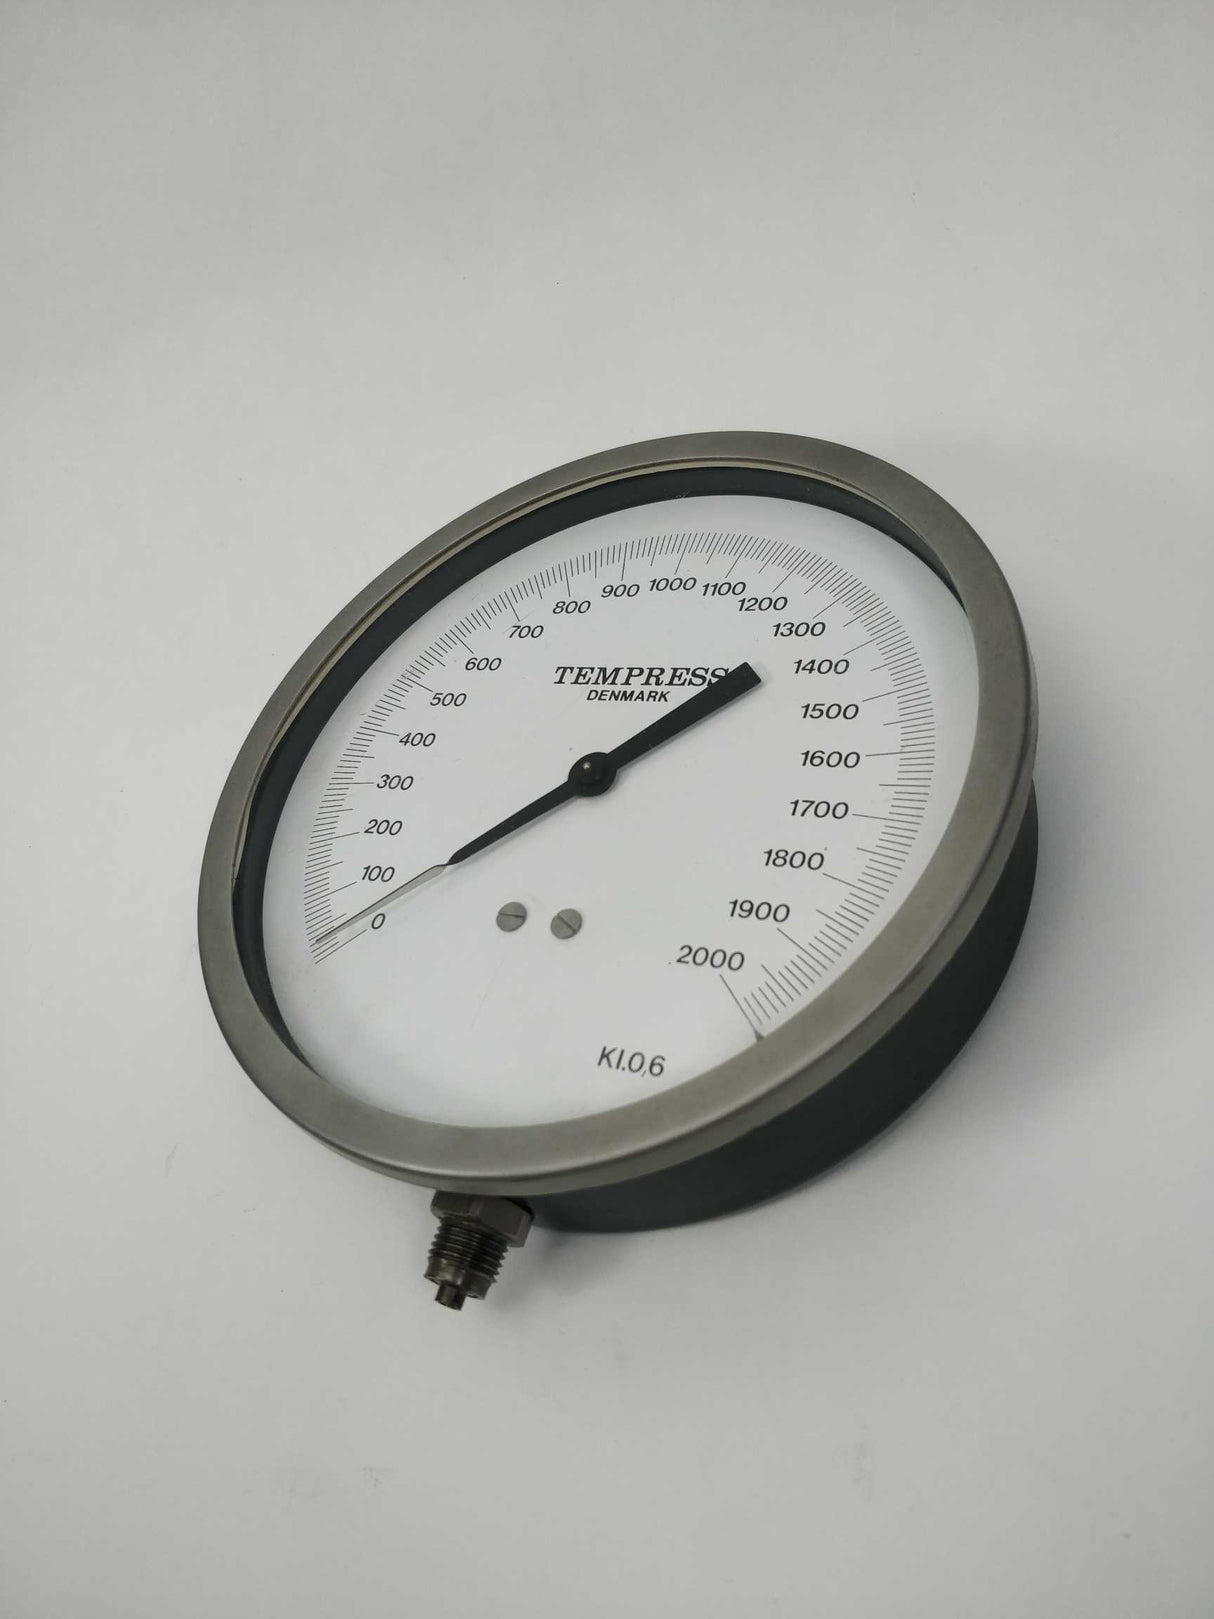 Tempress kl.0,6 Pressure gauge 0-2000